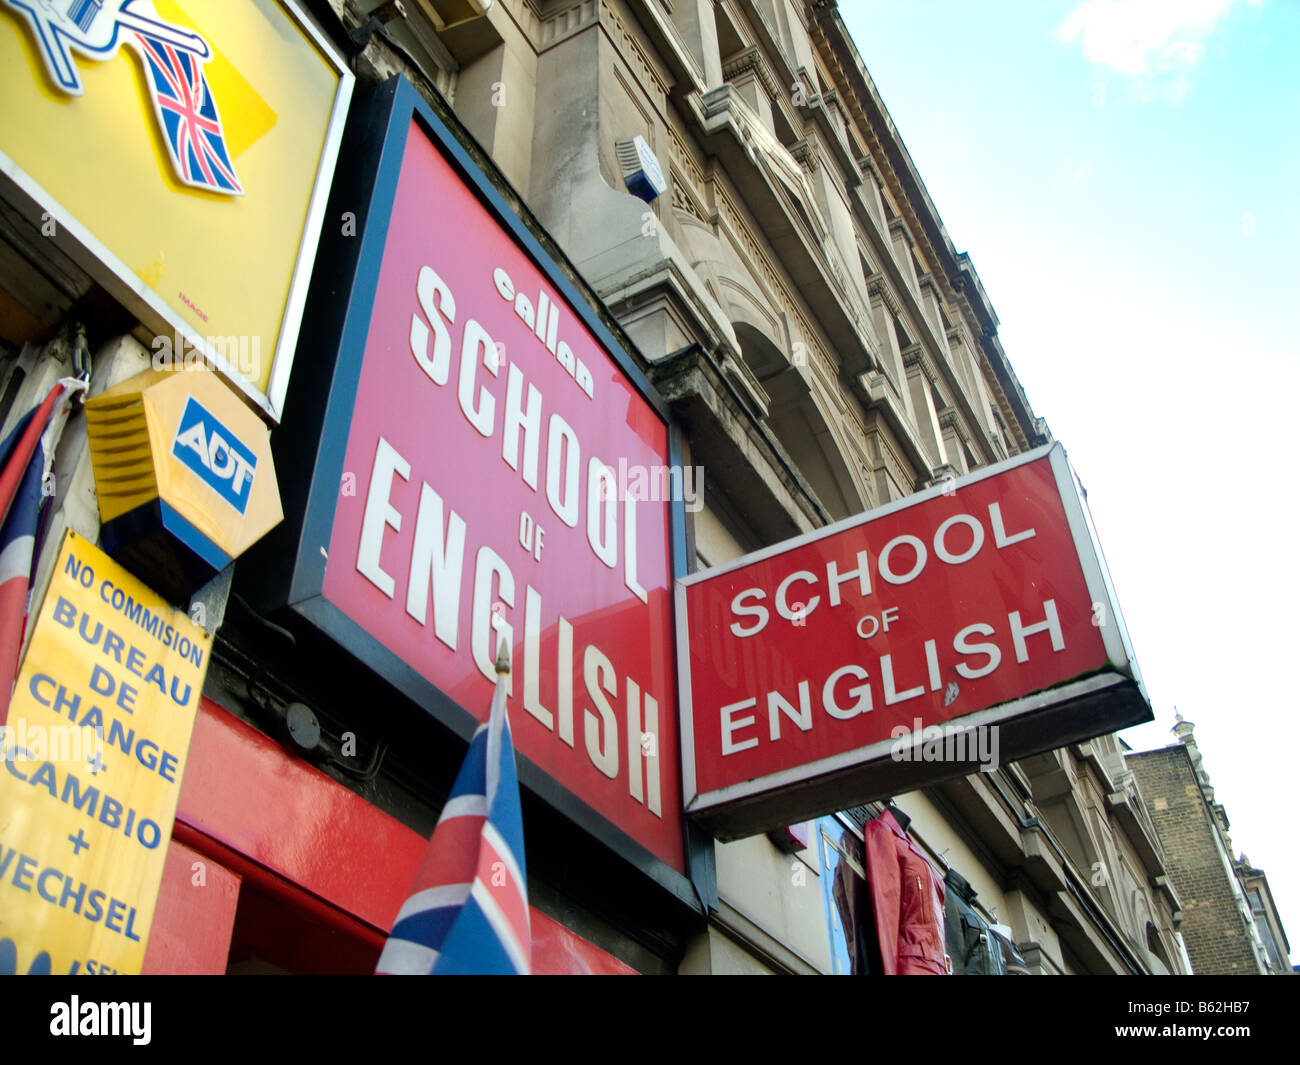 School of English, Oxford Street, London Stock Photo